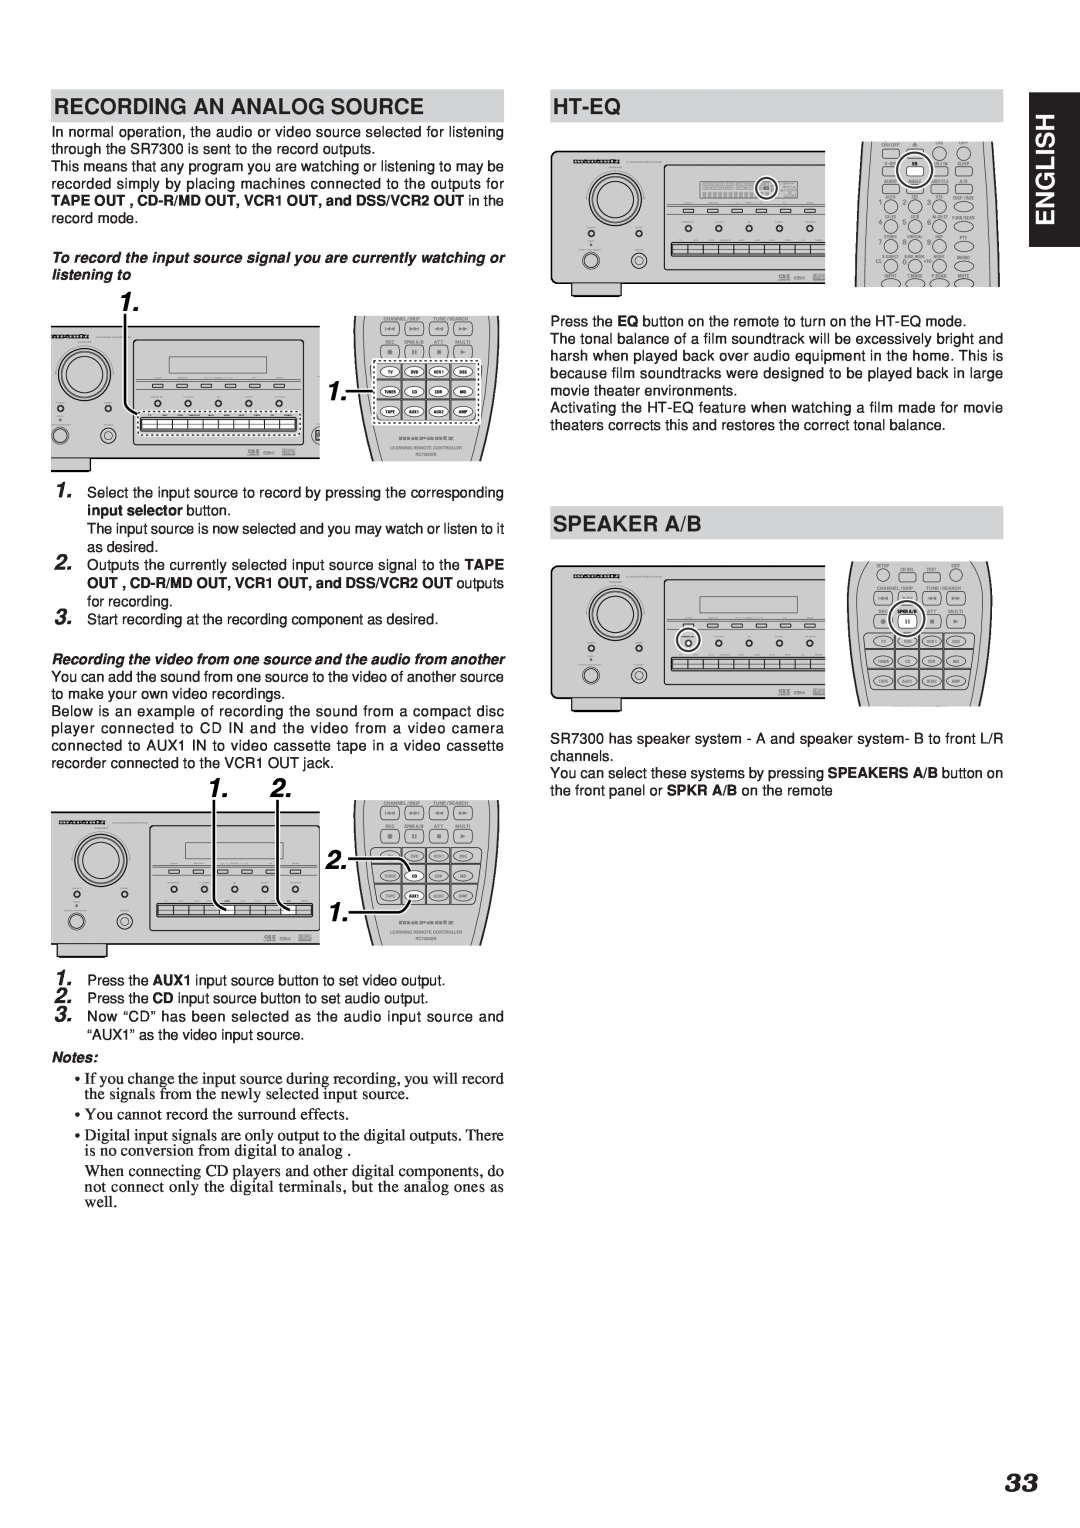 Marantz SR7300OSE manual English, Recording An Analog Source, Ht-Eq, Speaker A/B 